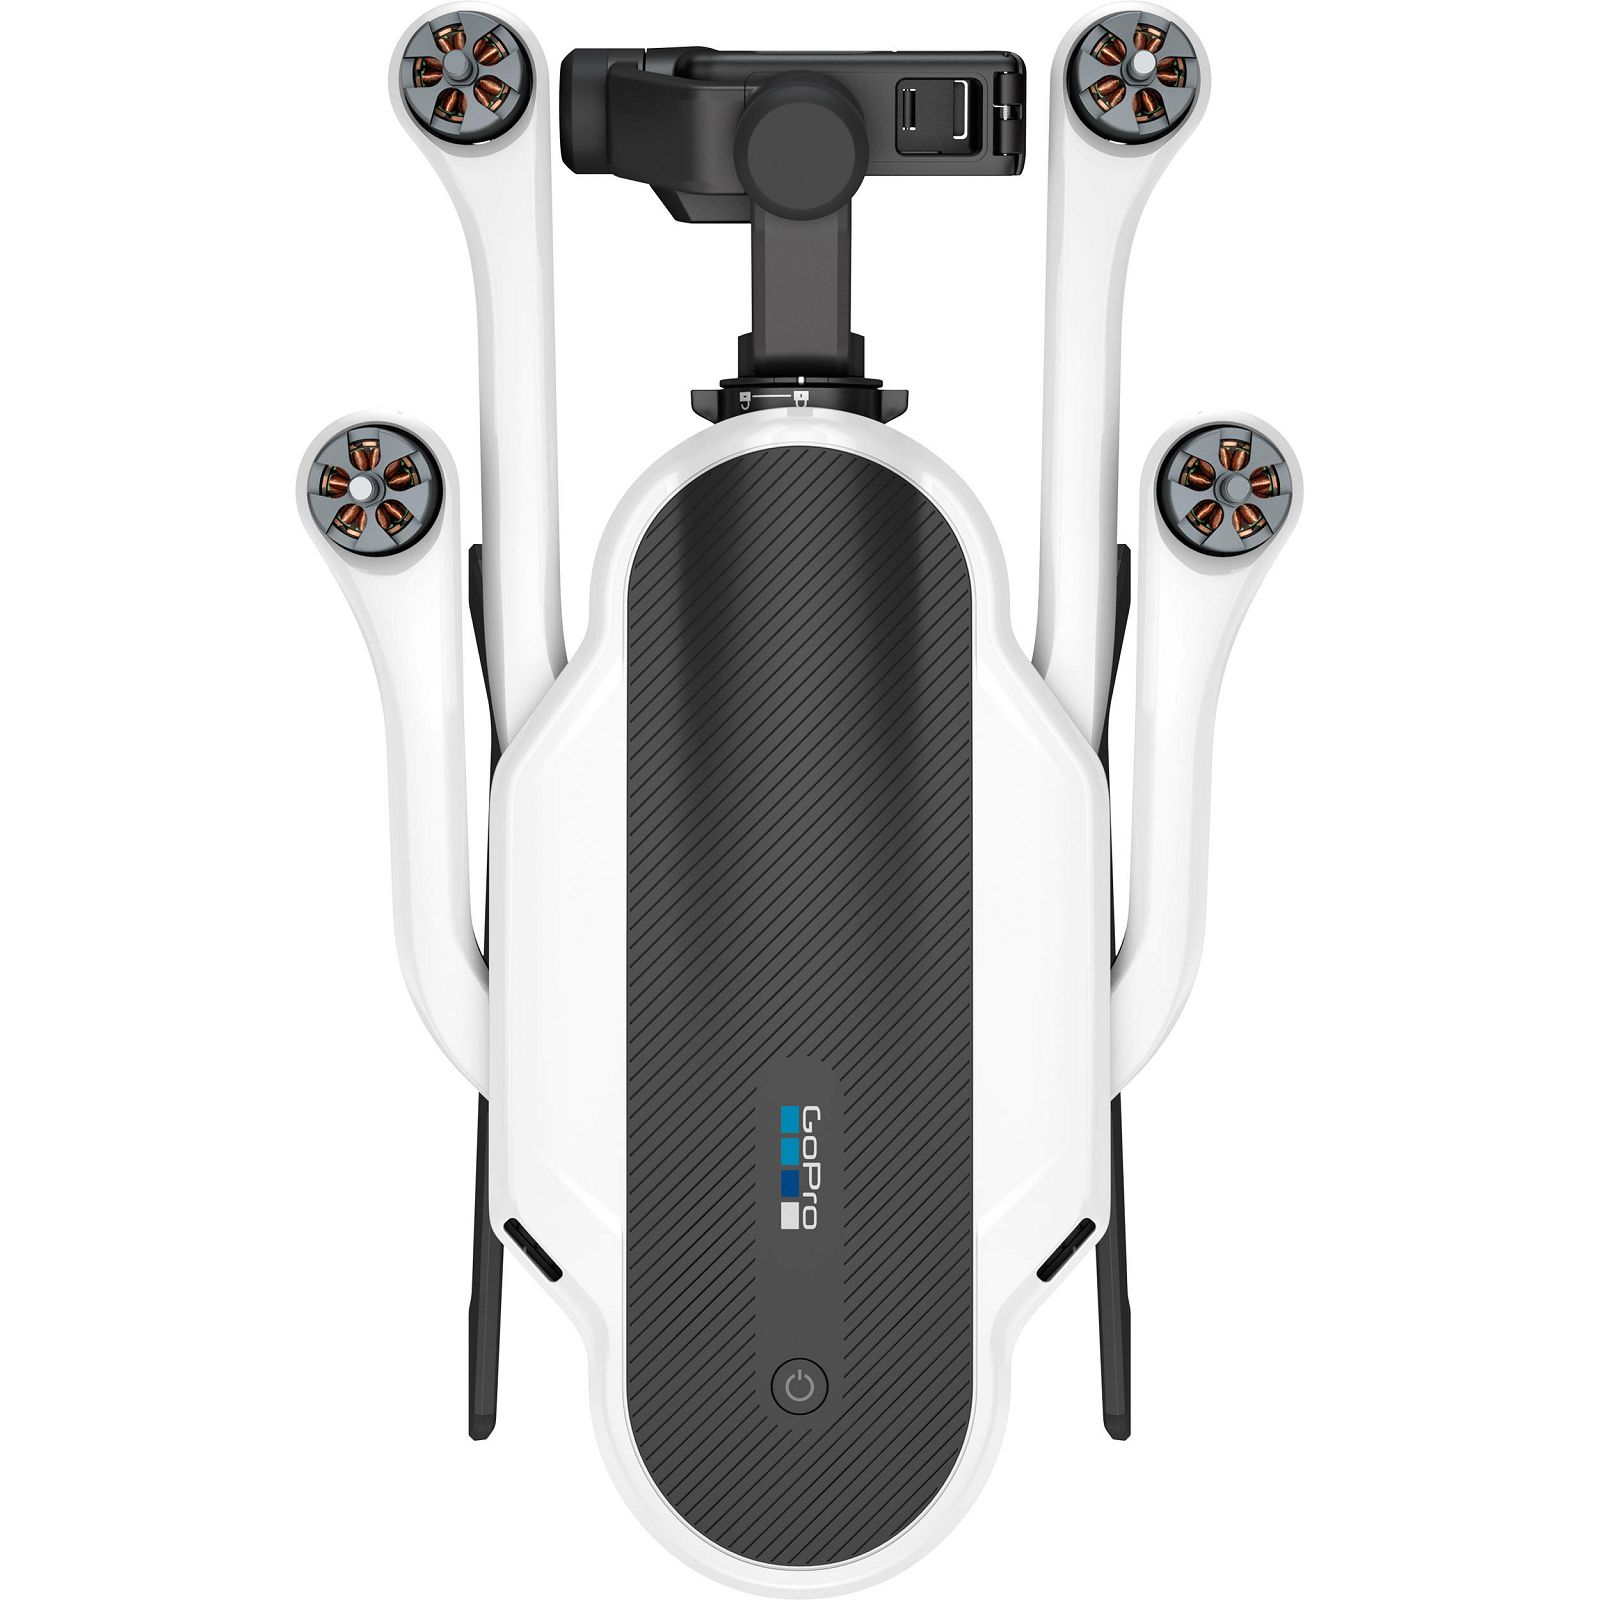 GoPro Karma Drone (za HERO4) Quadcopter dron sa stabilizacijom za snimanje iz zraka